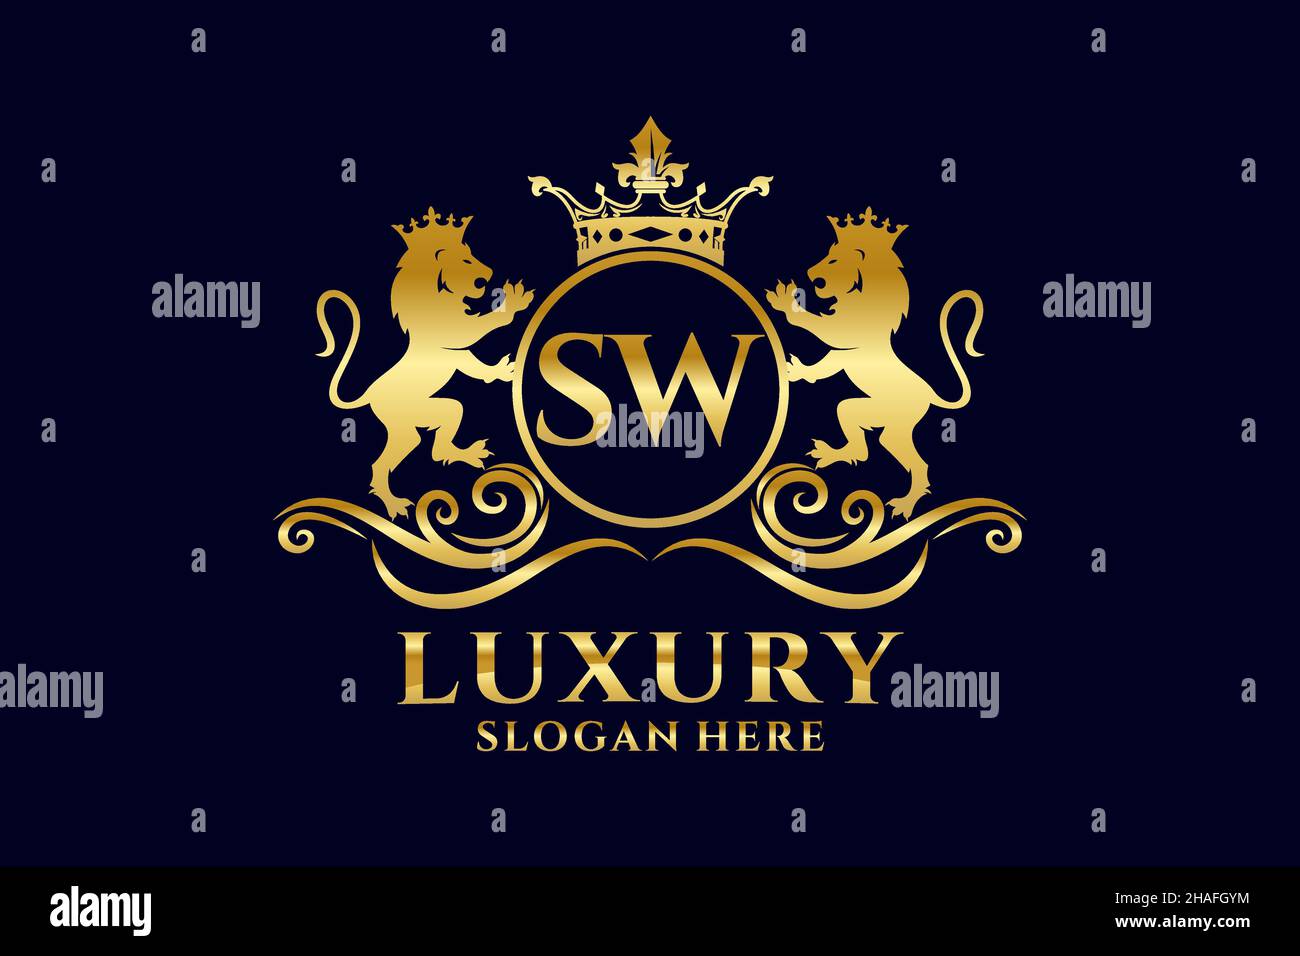 SW Letter Lion Royal Luxury Logo-Vorlage in Vektorgrafik für luxuriöse Branding-Projekte und andere Vektorgrafik. Stock Vektor